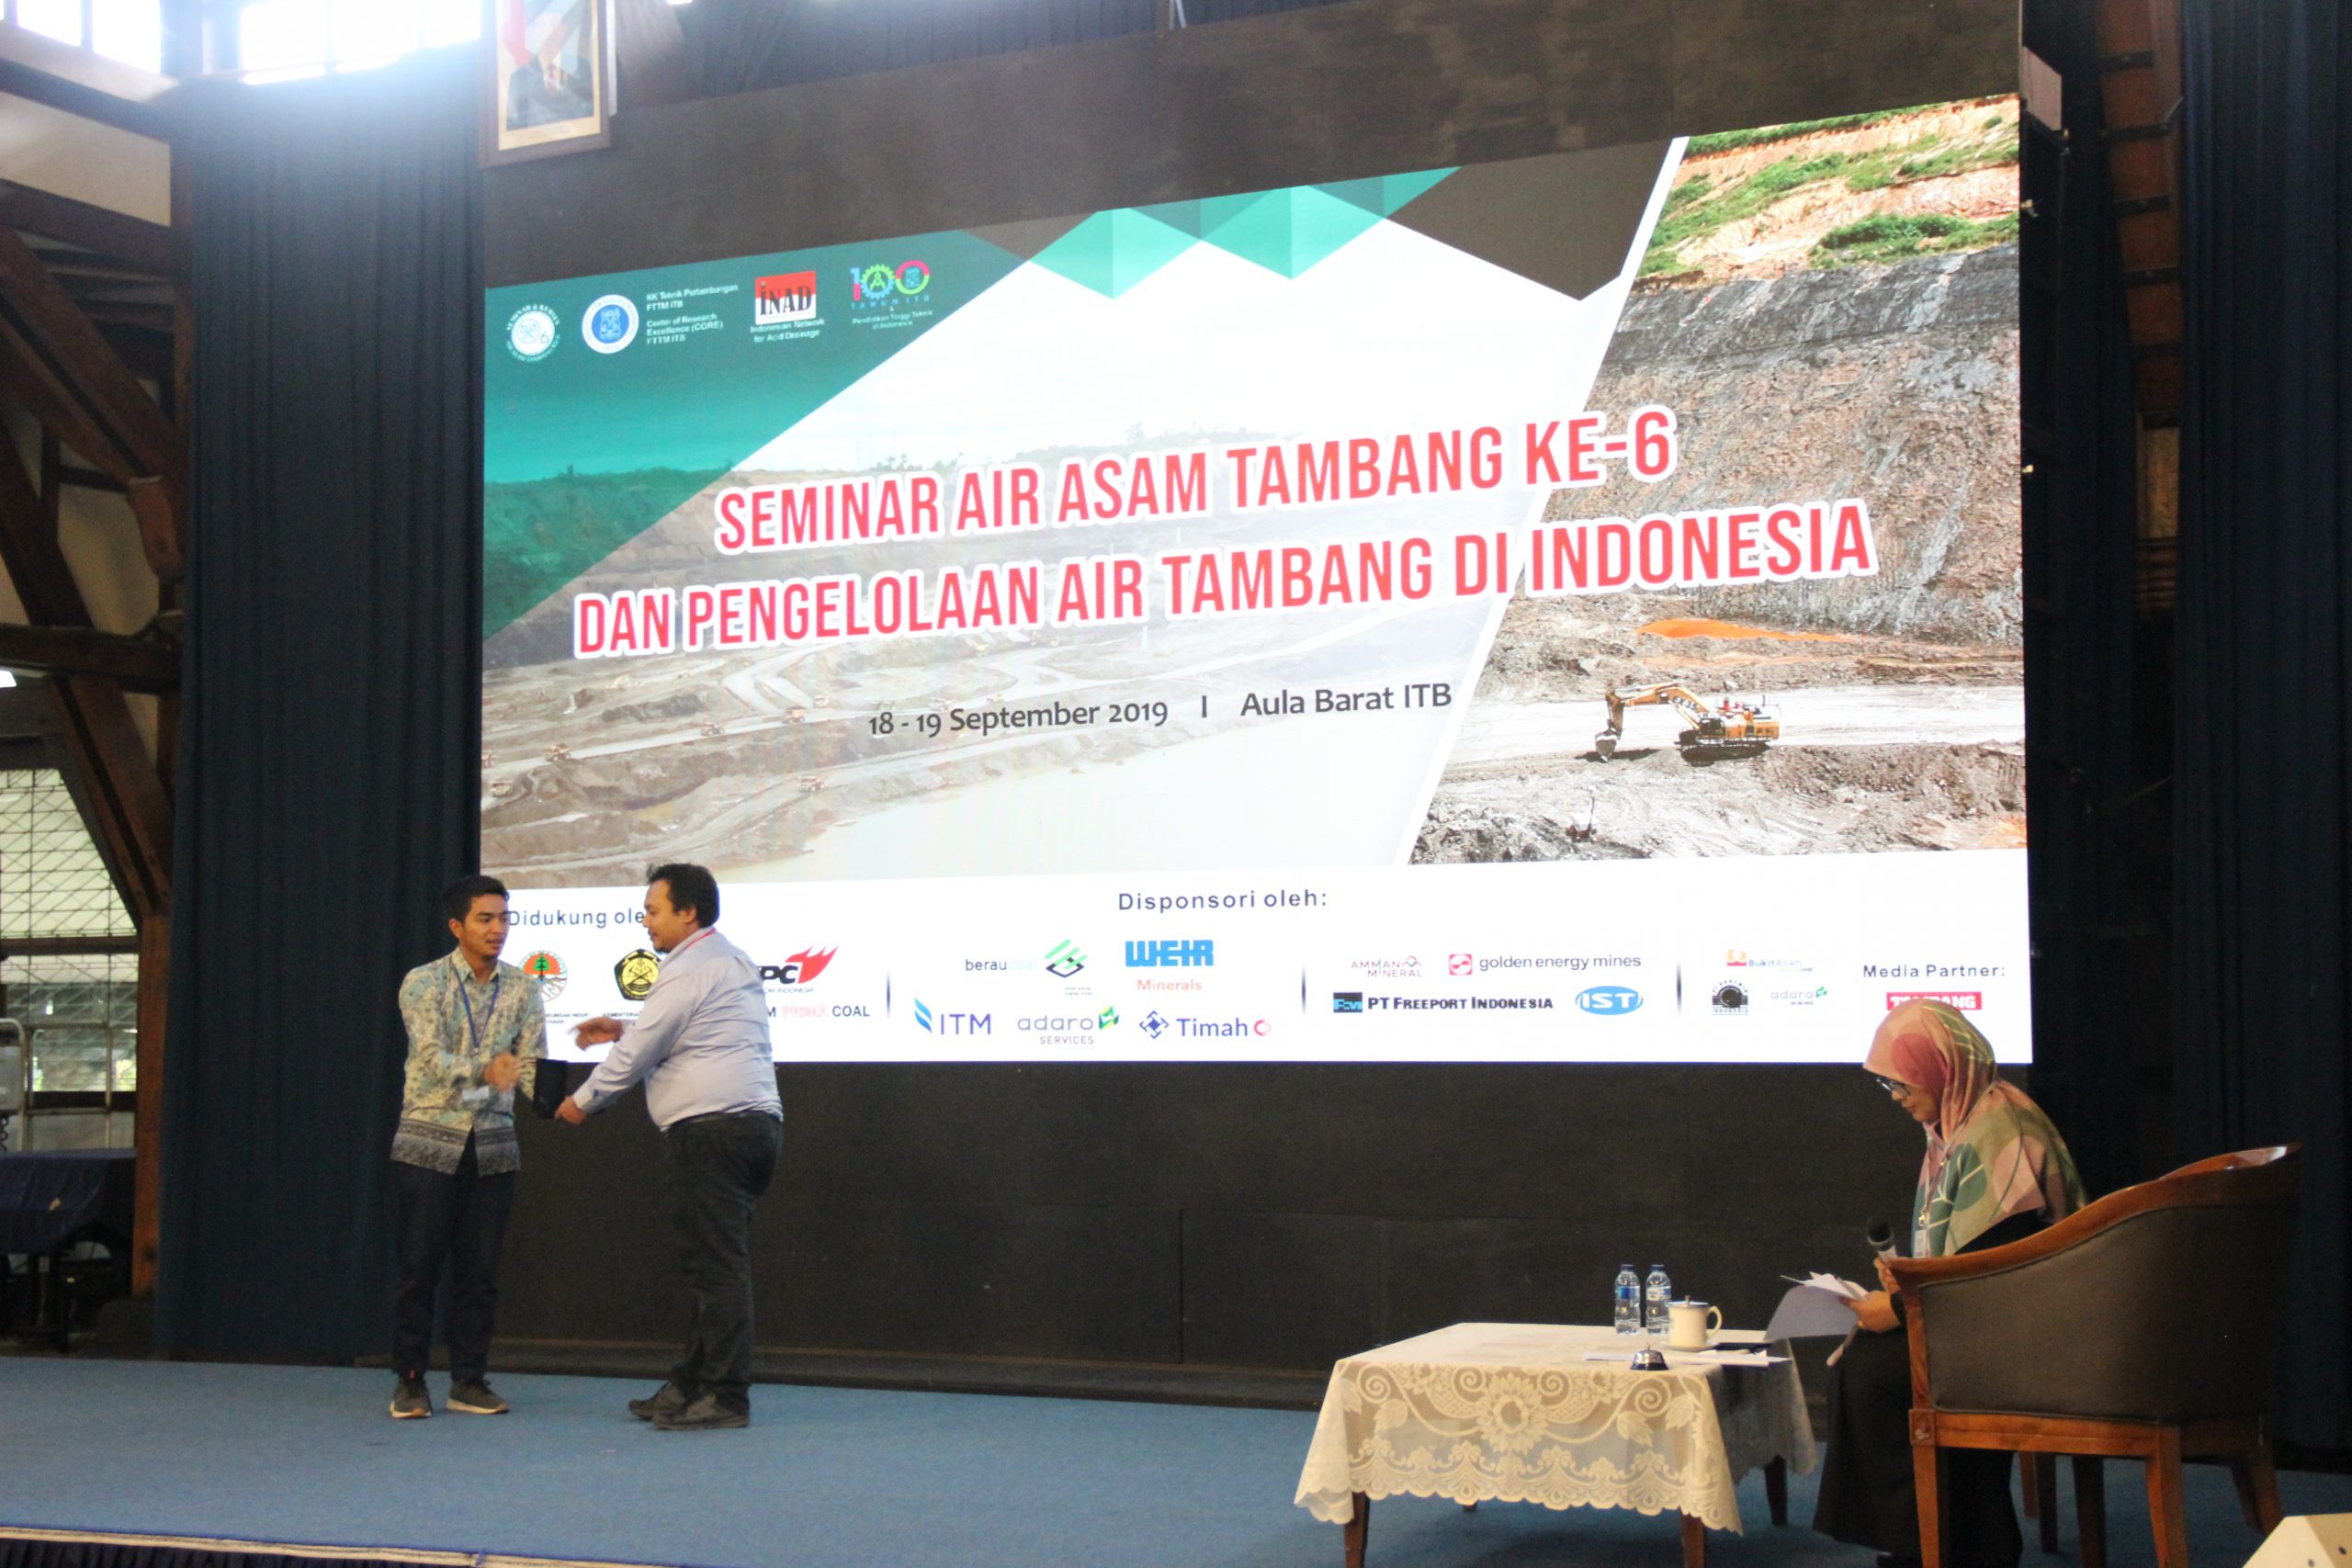 FTTM menyelenggarakan Seminar Air Asam Tambang ke-6 dan Pengelolaan Air Tambang di Indonesia